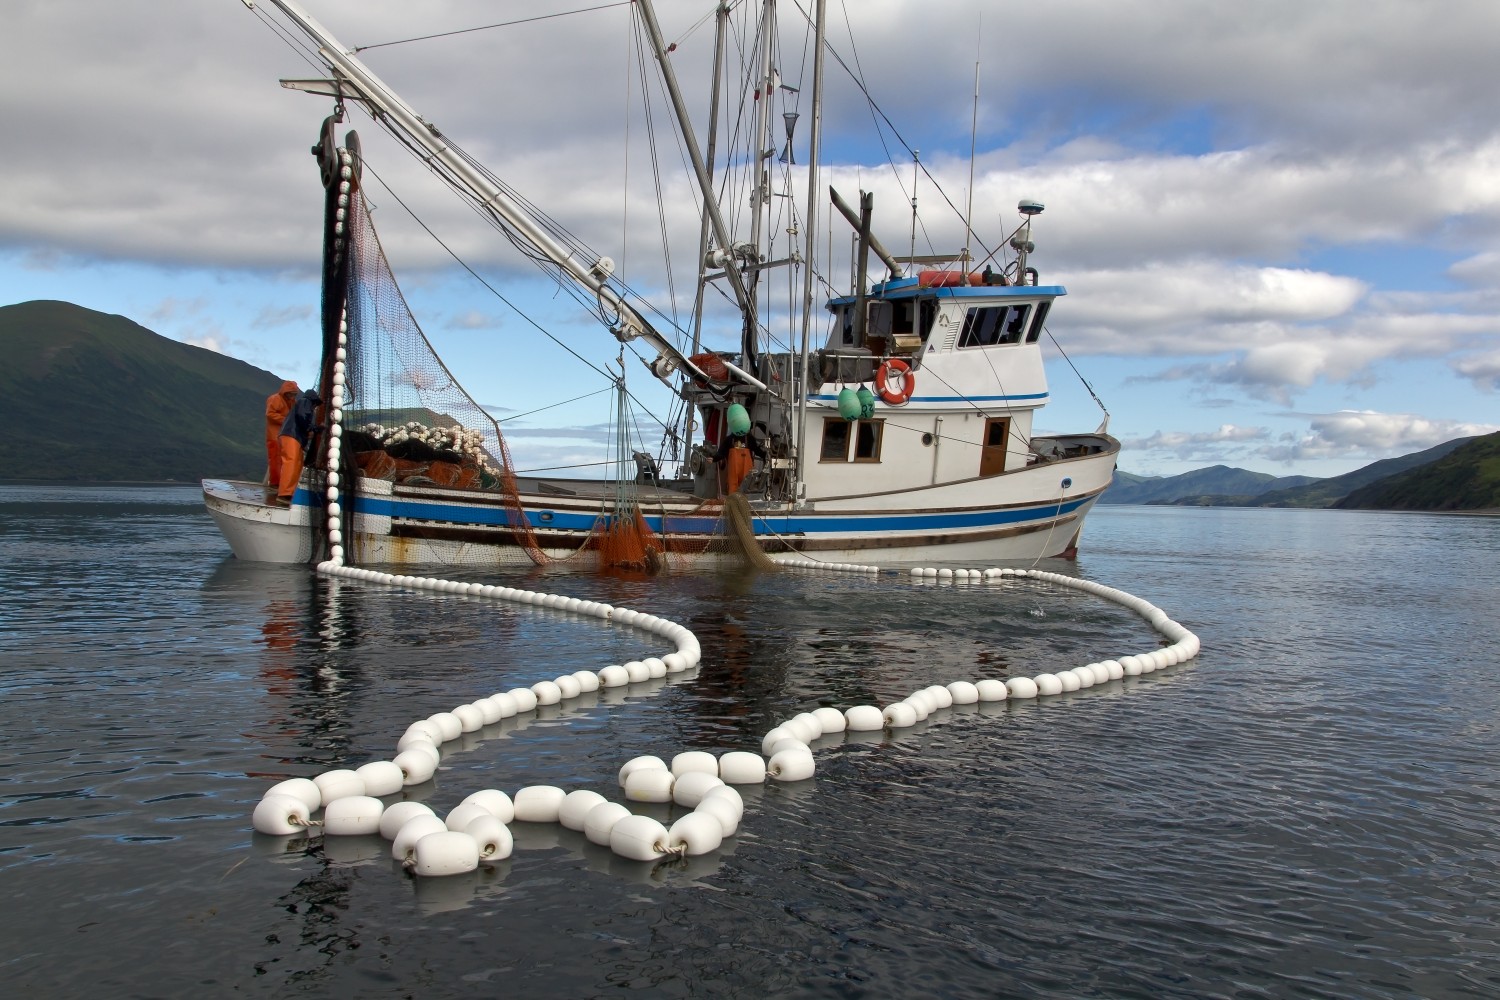 Pesca industrial - Economia - InfoEscola